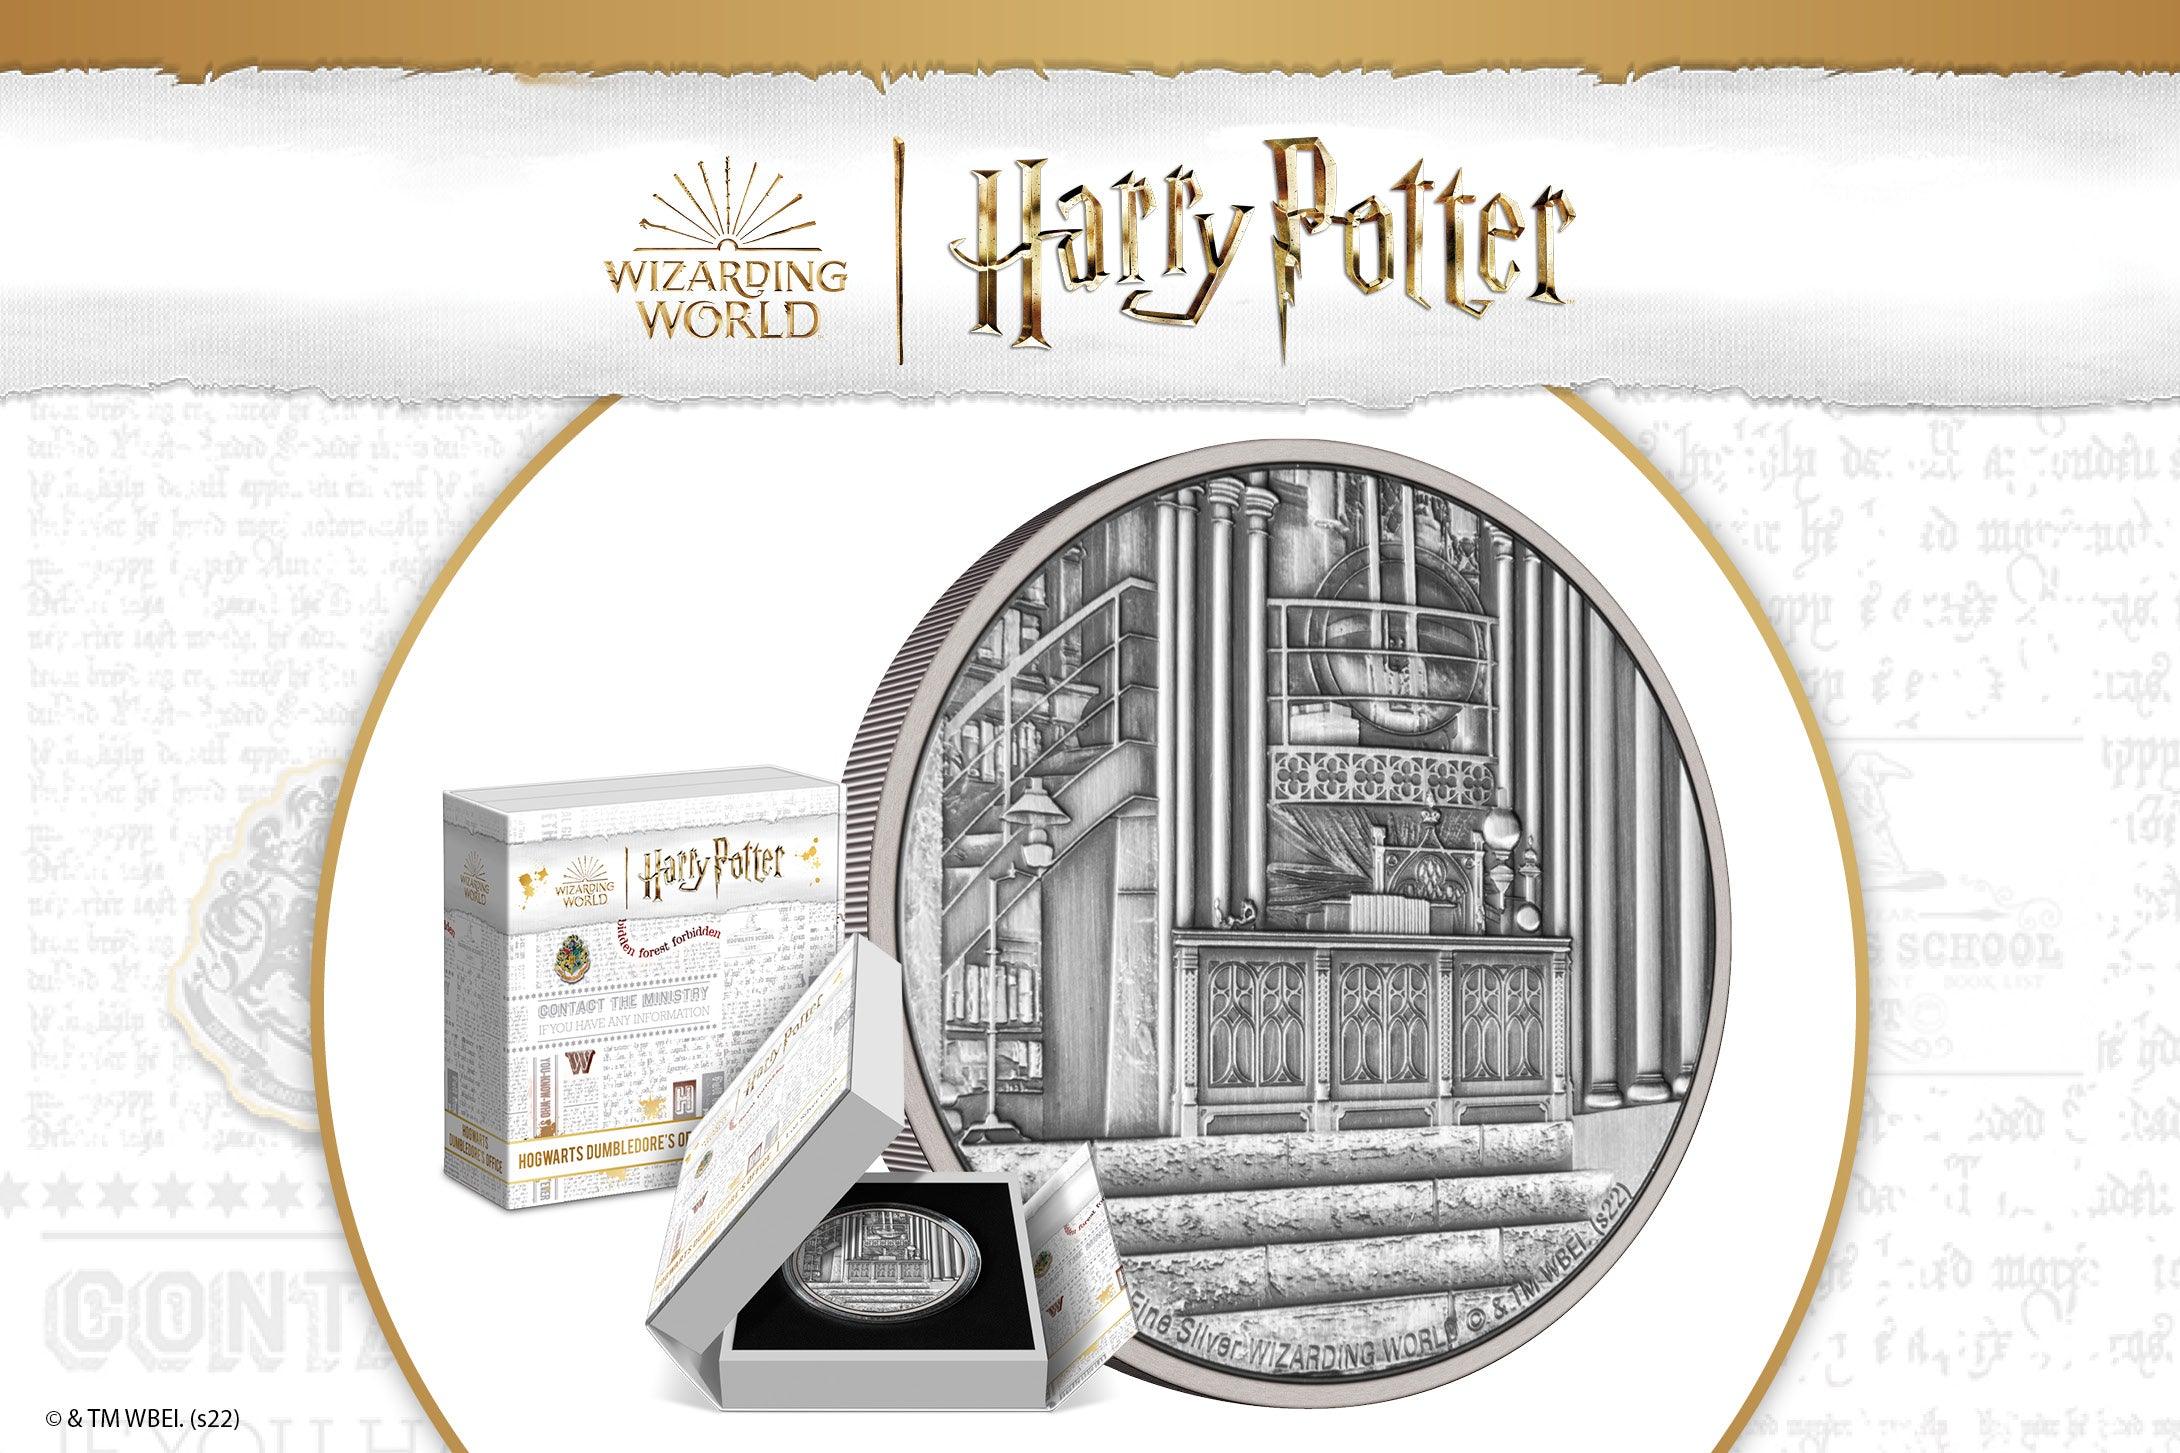 Wizarding World of Harry Potter - Dumbledore's office